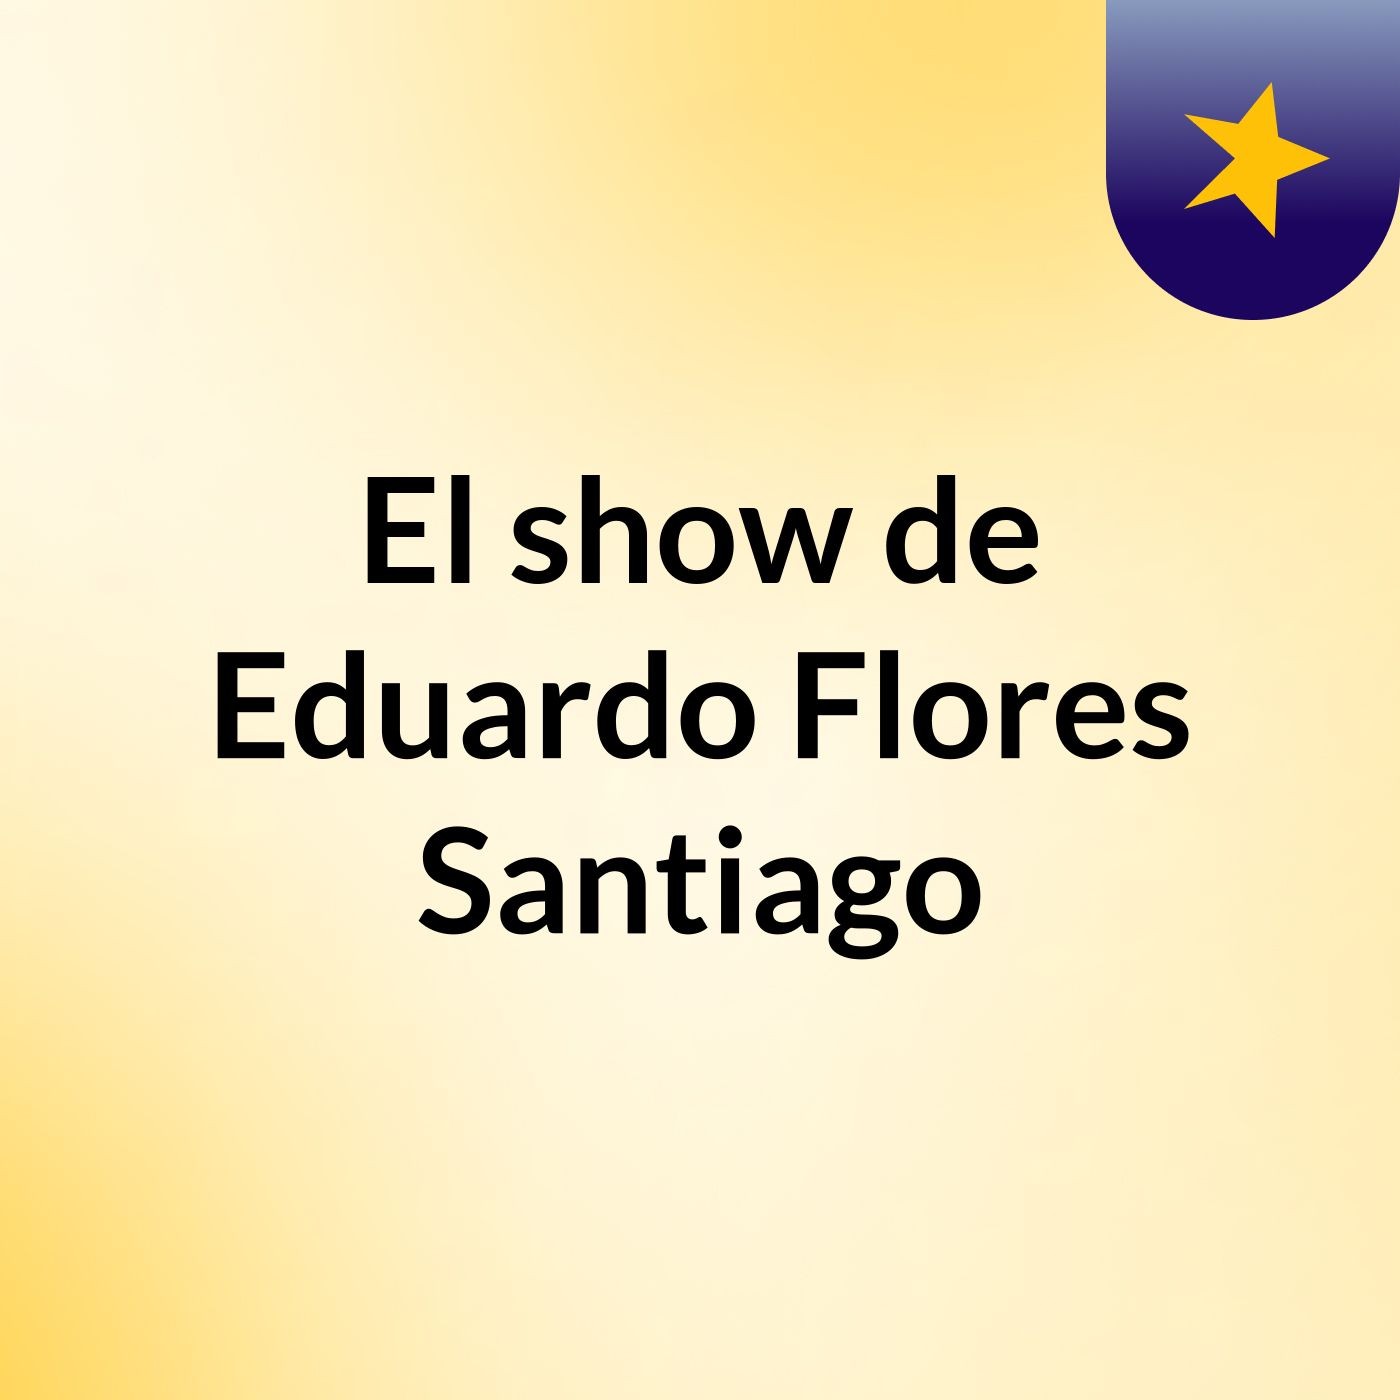 El show de Eduardo Flores Santiago